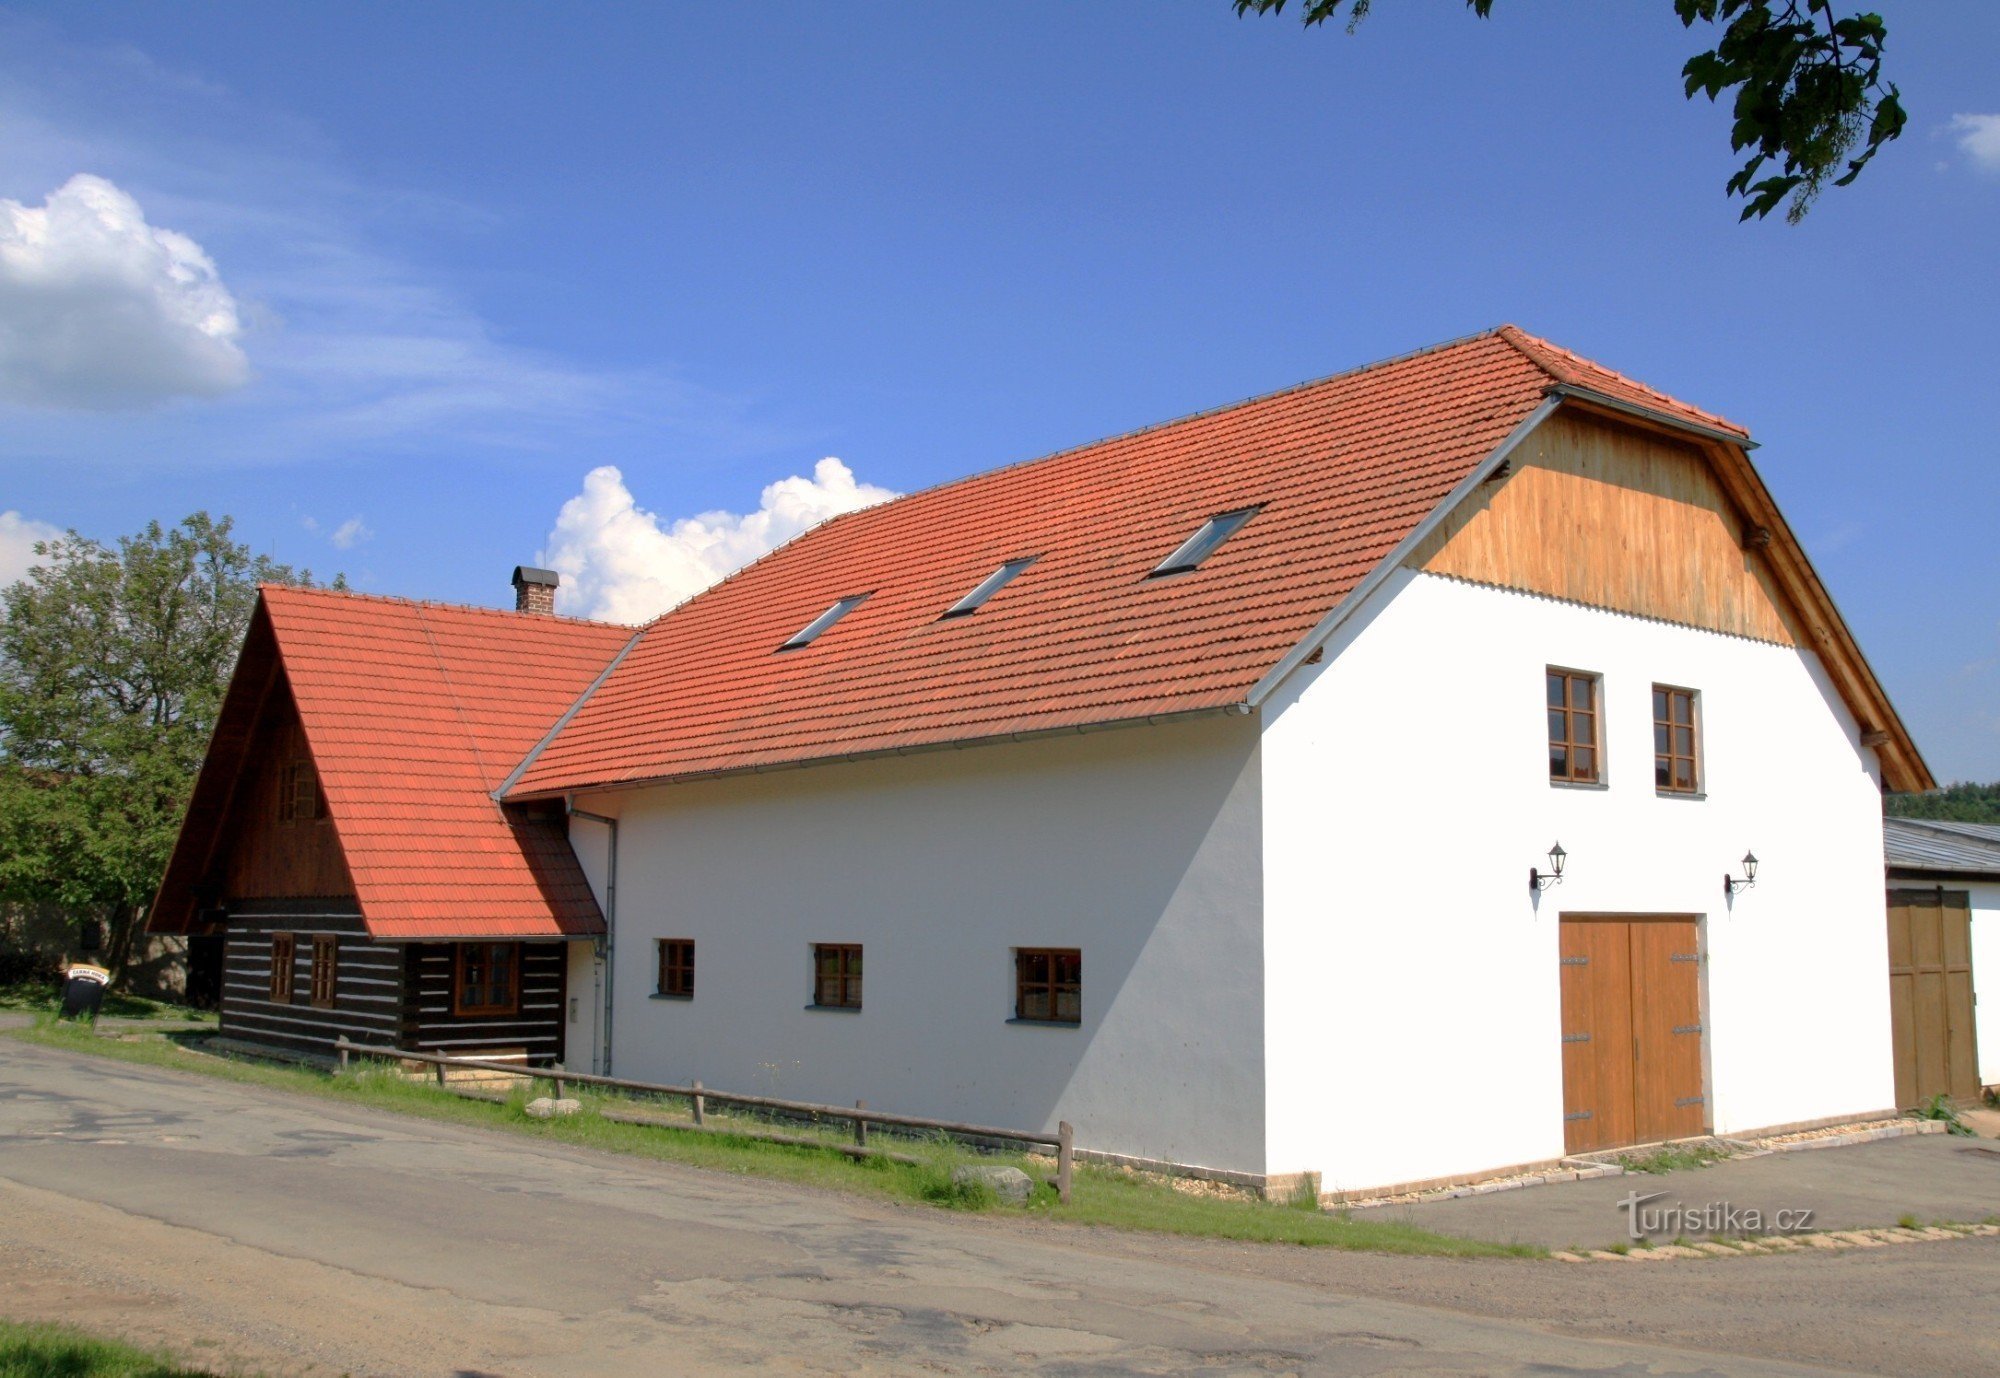 Horní Smržov - museo de arquitectura popular